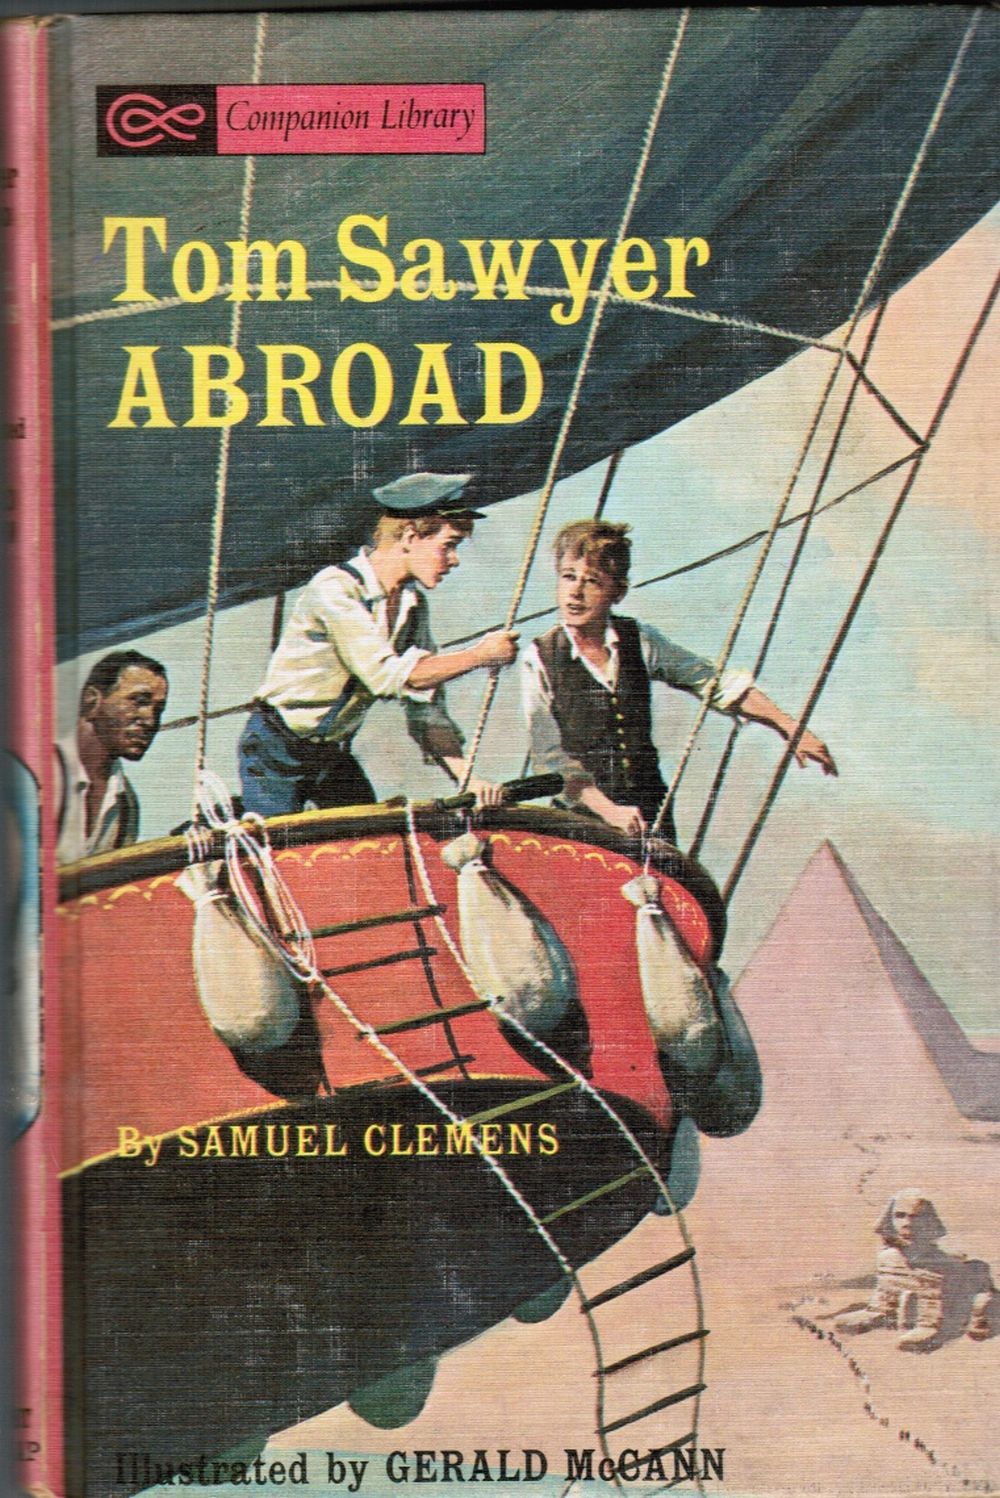 CLEMENS, SAMUEL - Tom Sawyer Abroad